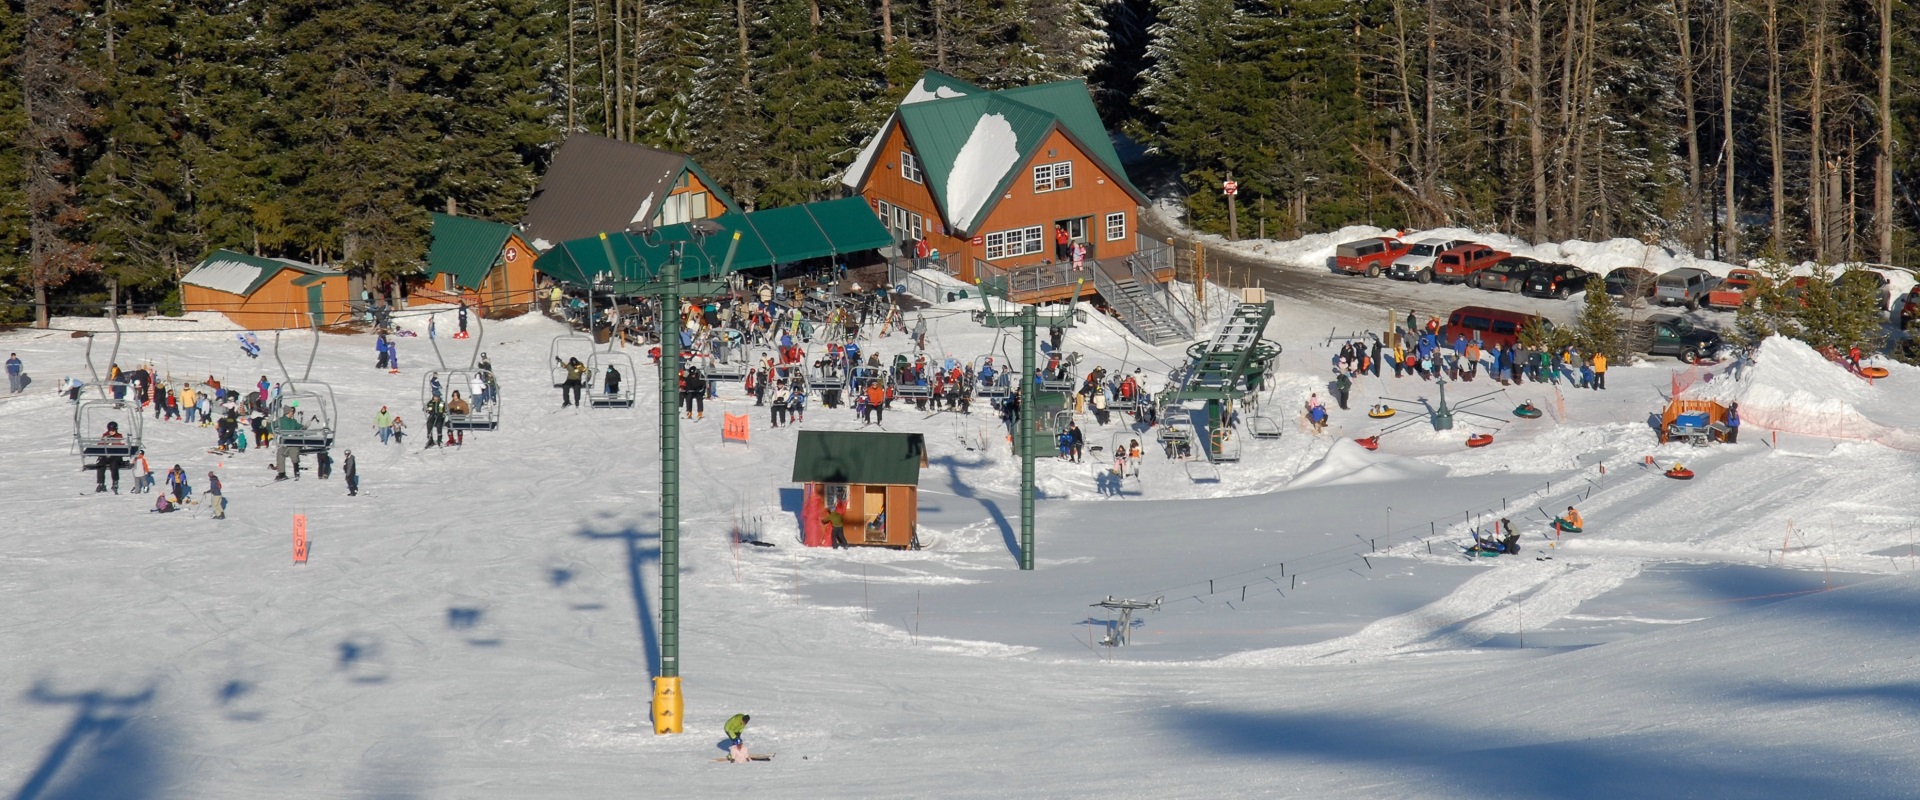 Mt hood ski resorts